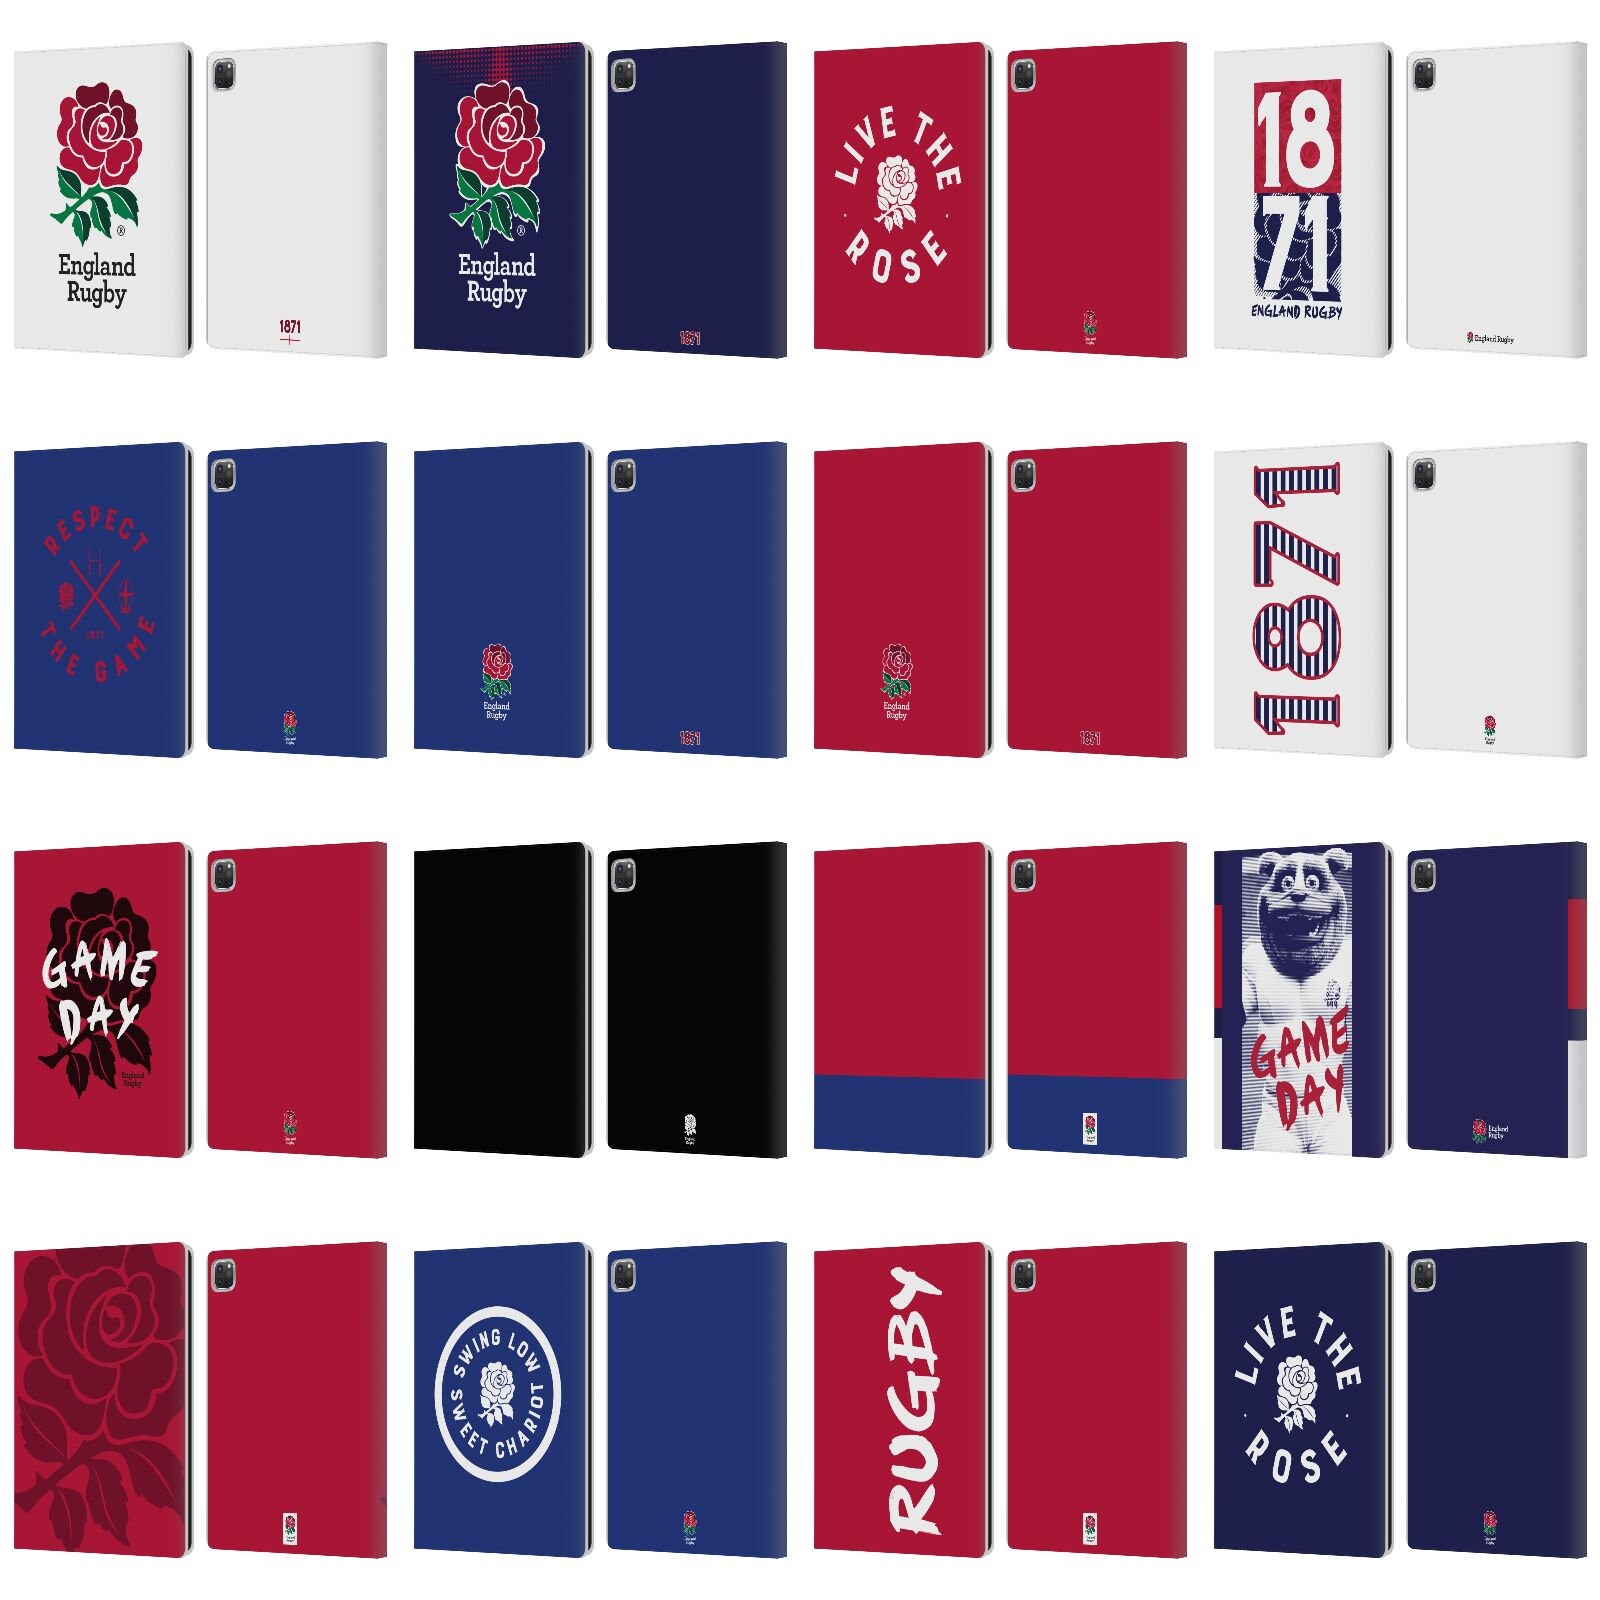 2022 England Rugby Union Shirt History Artwork 2007-2022